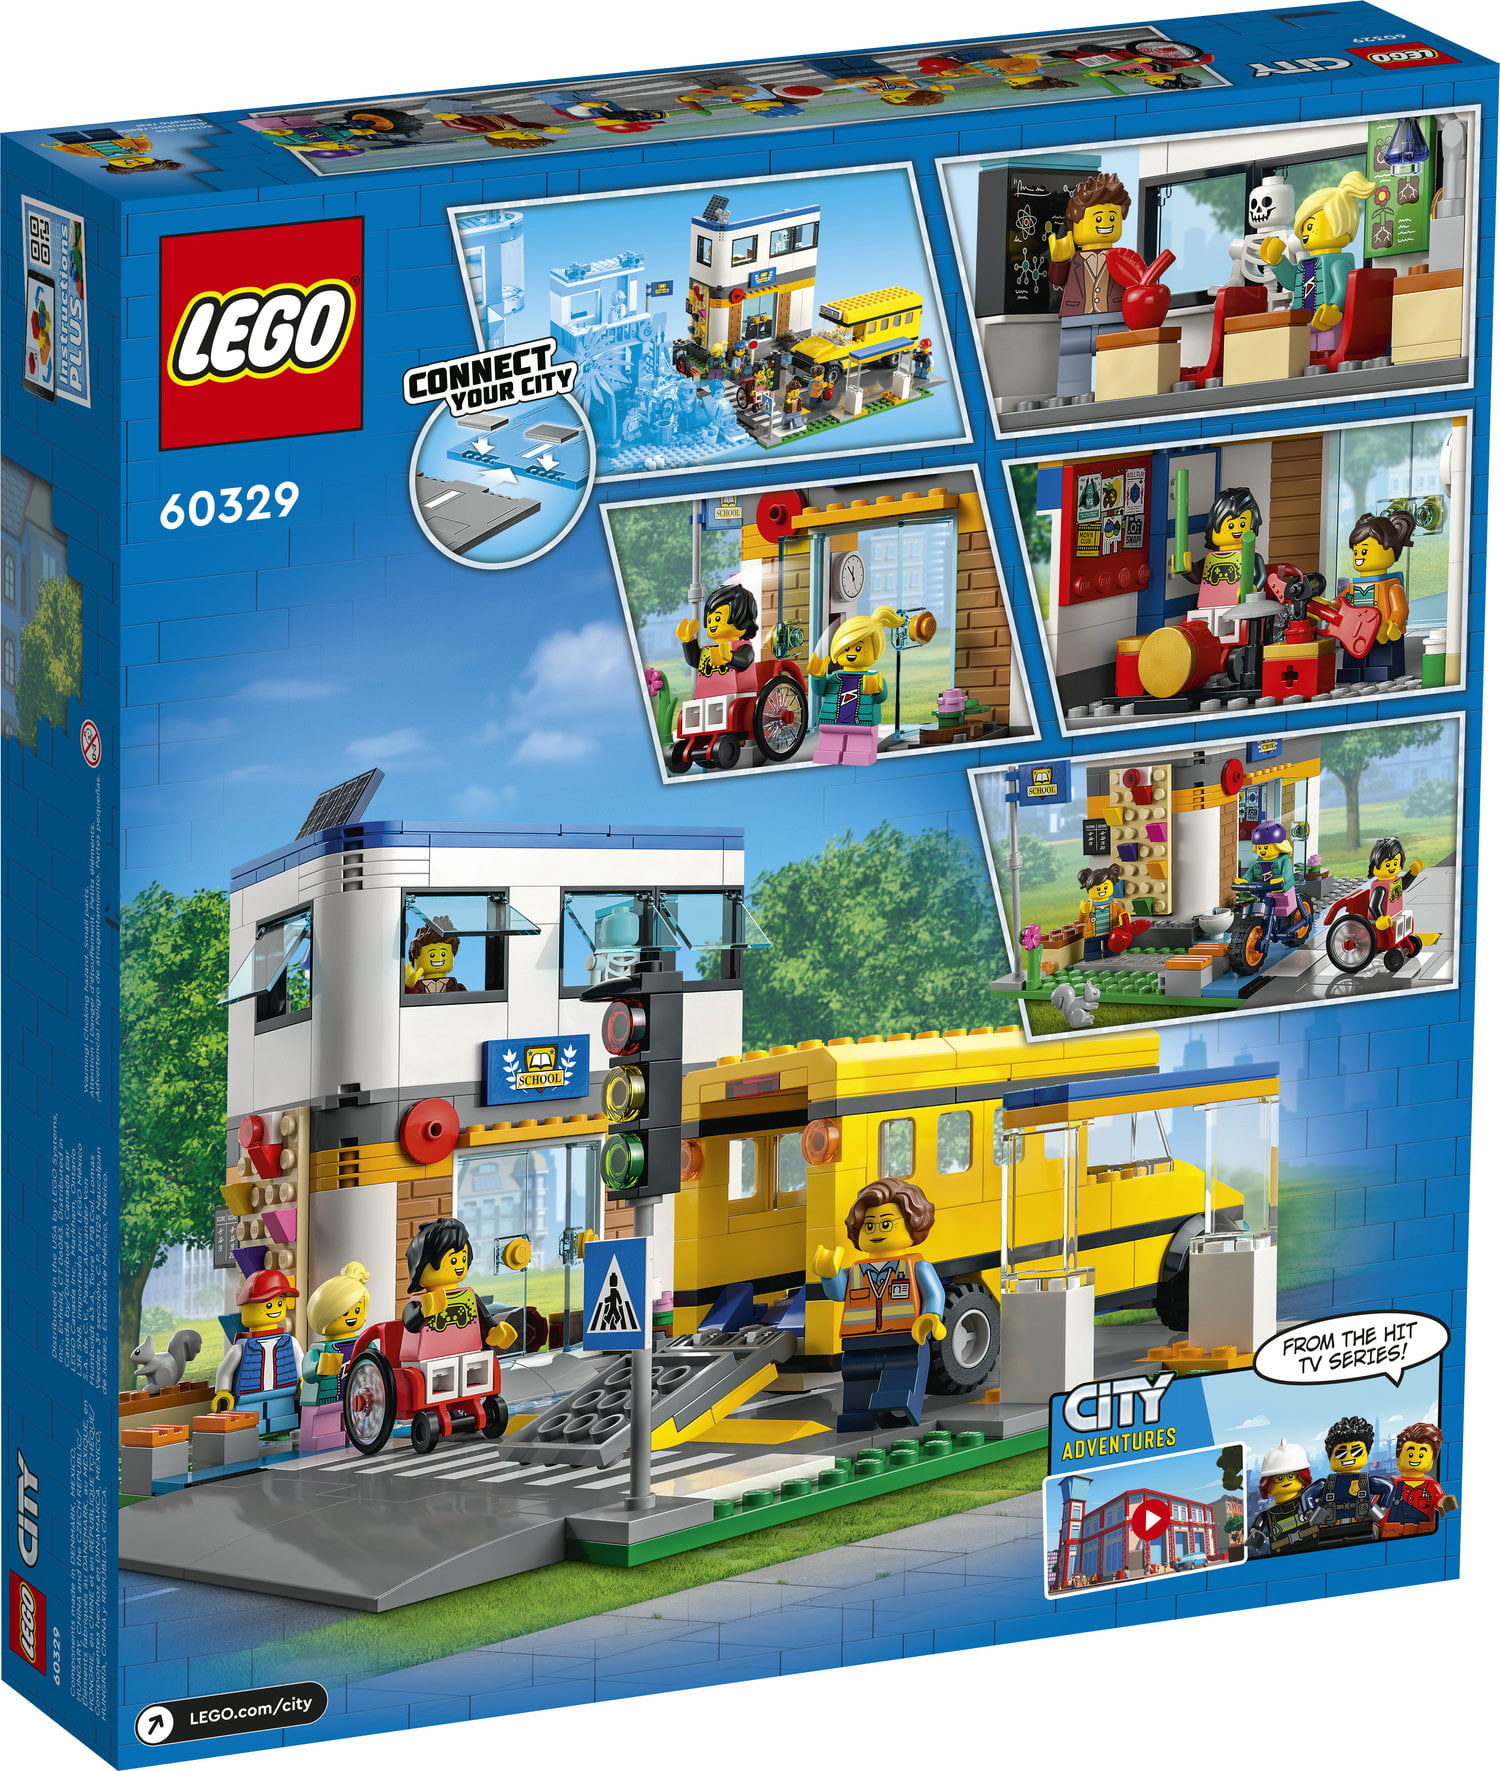 Governable Lav Landmand LEGO School Day 60329 Building Set (433 Pieces) - Walmart.com